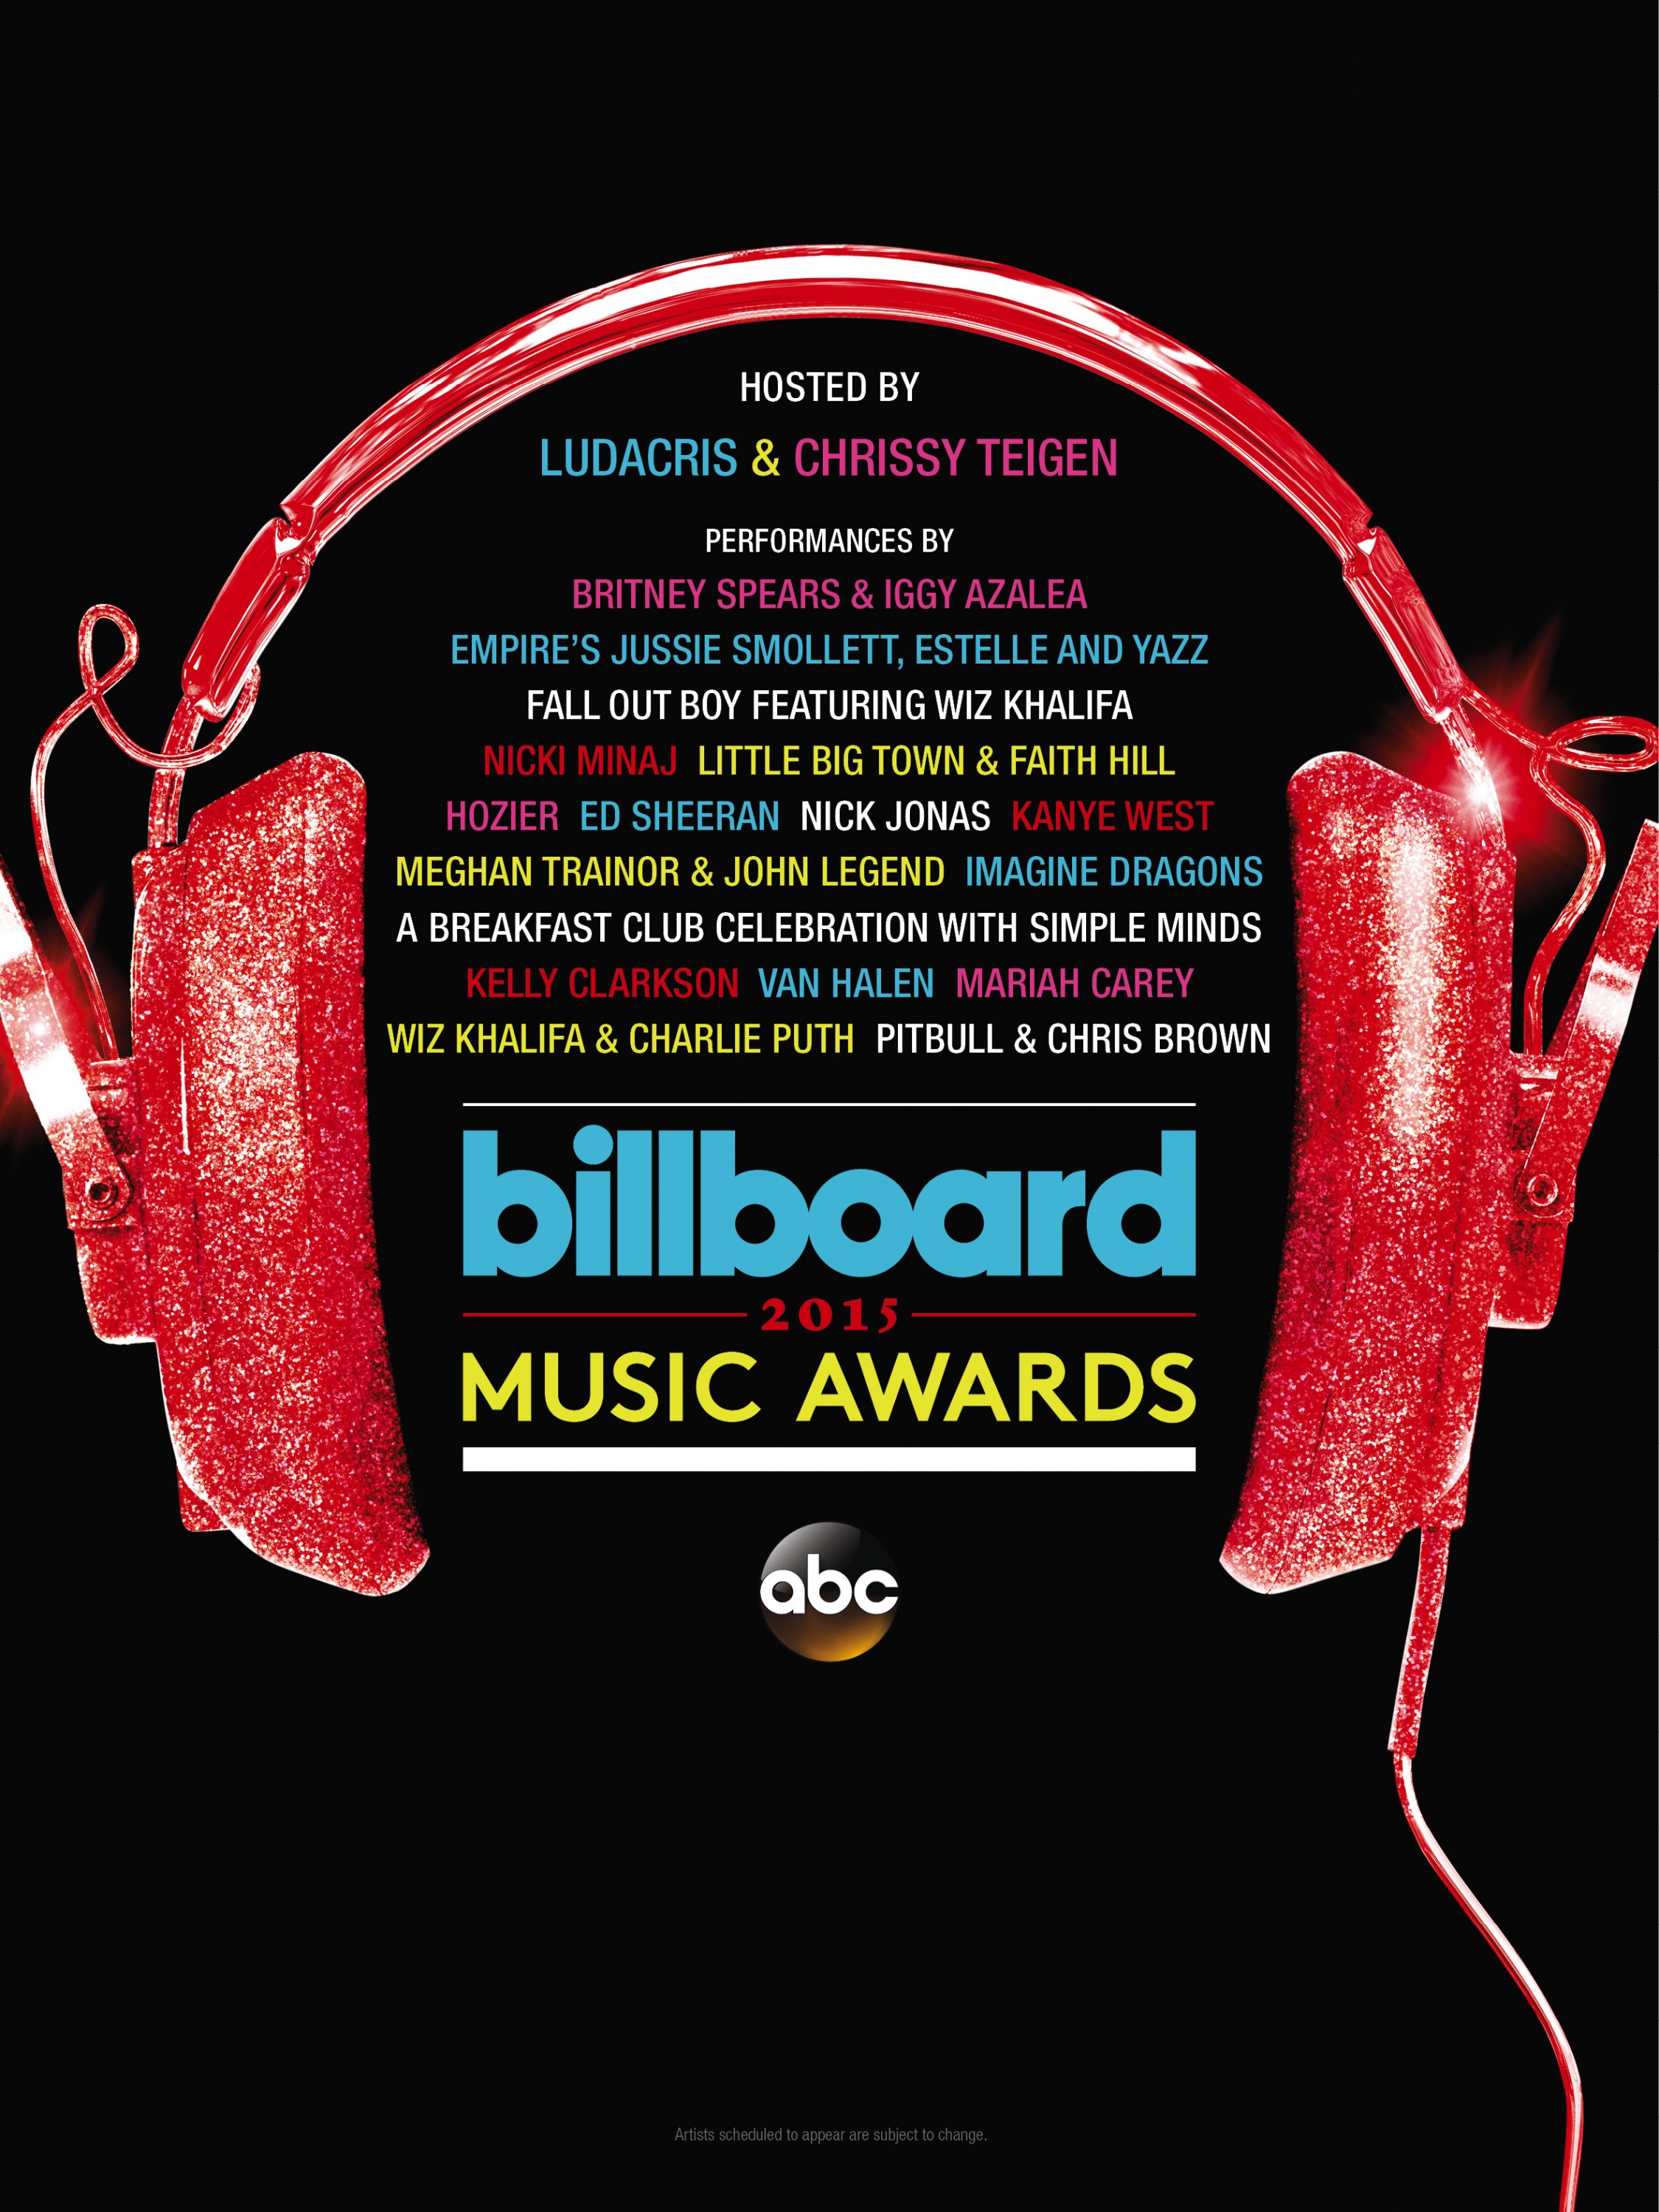 Mega Sized TV Poster Image for 2015 Billboard Music Awards (#7 of 7)